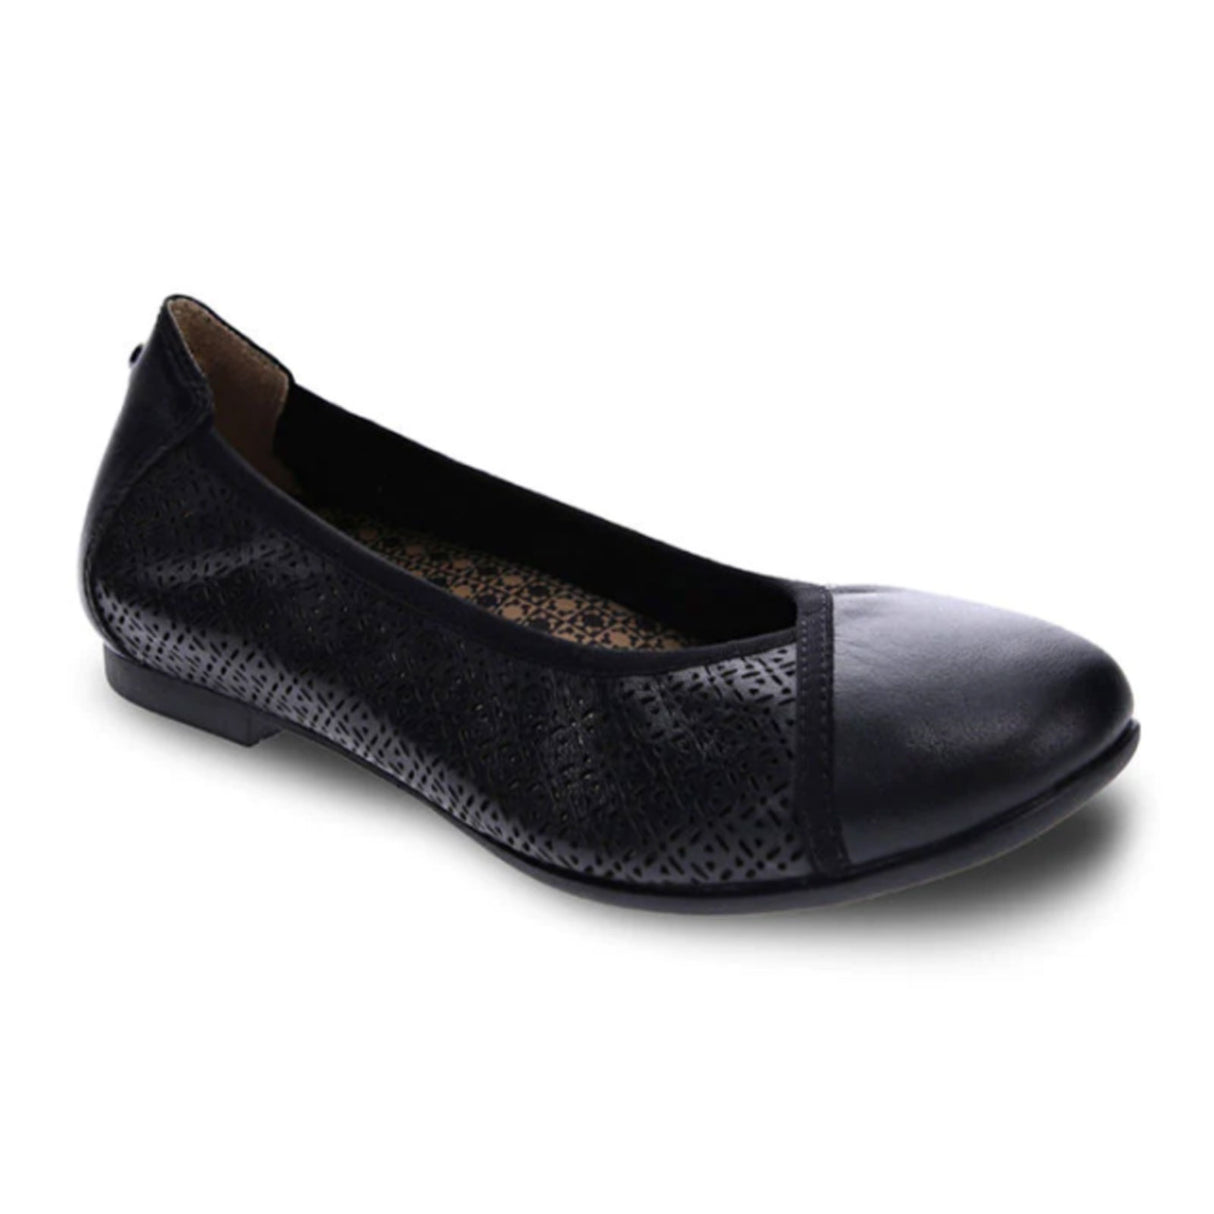 Revere Nairobi Ballet Flat (Women) - Black Lazer Dress-Casual - Flats - The Heel Shoe Fitters